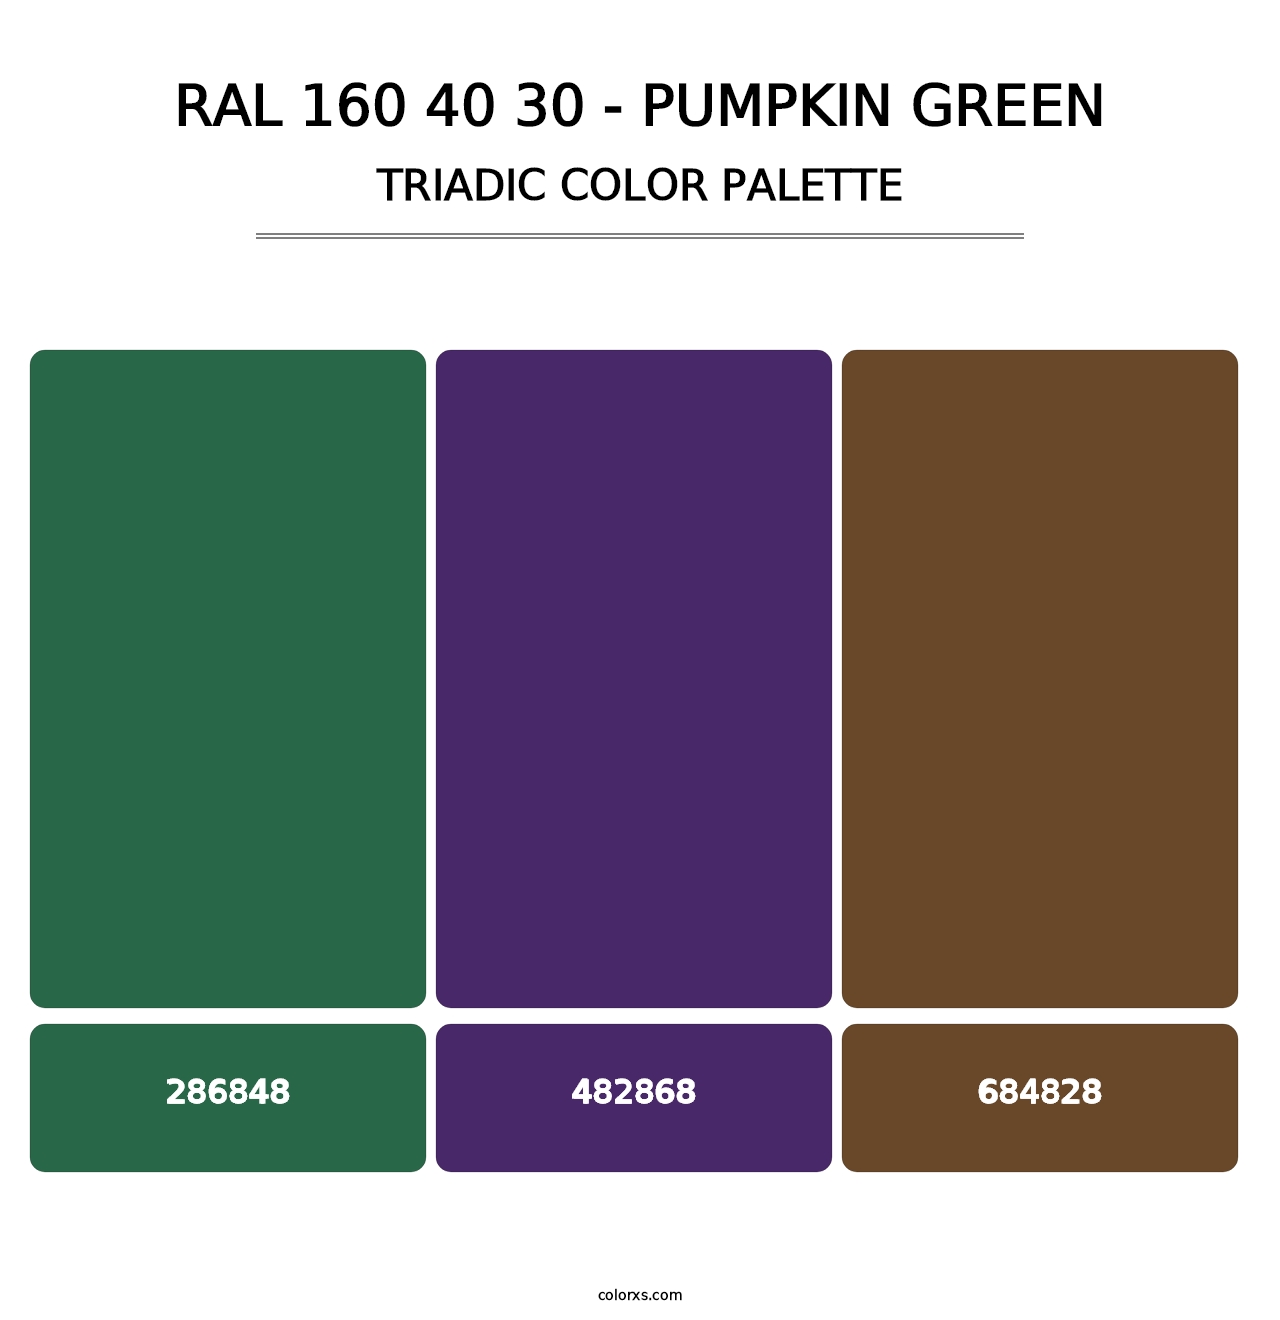 RAL 160 40 30 - Pumpkin Green - Triadic Color Palette